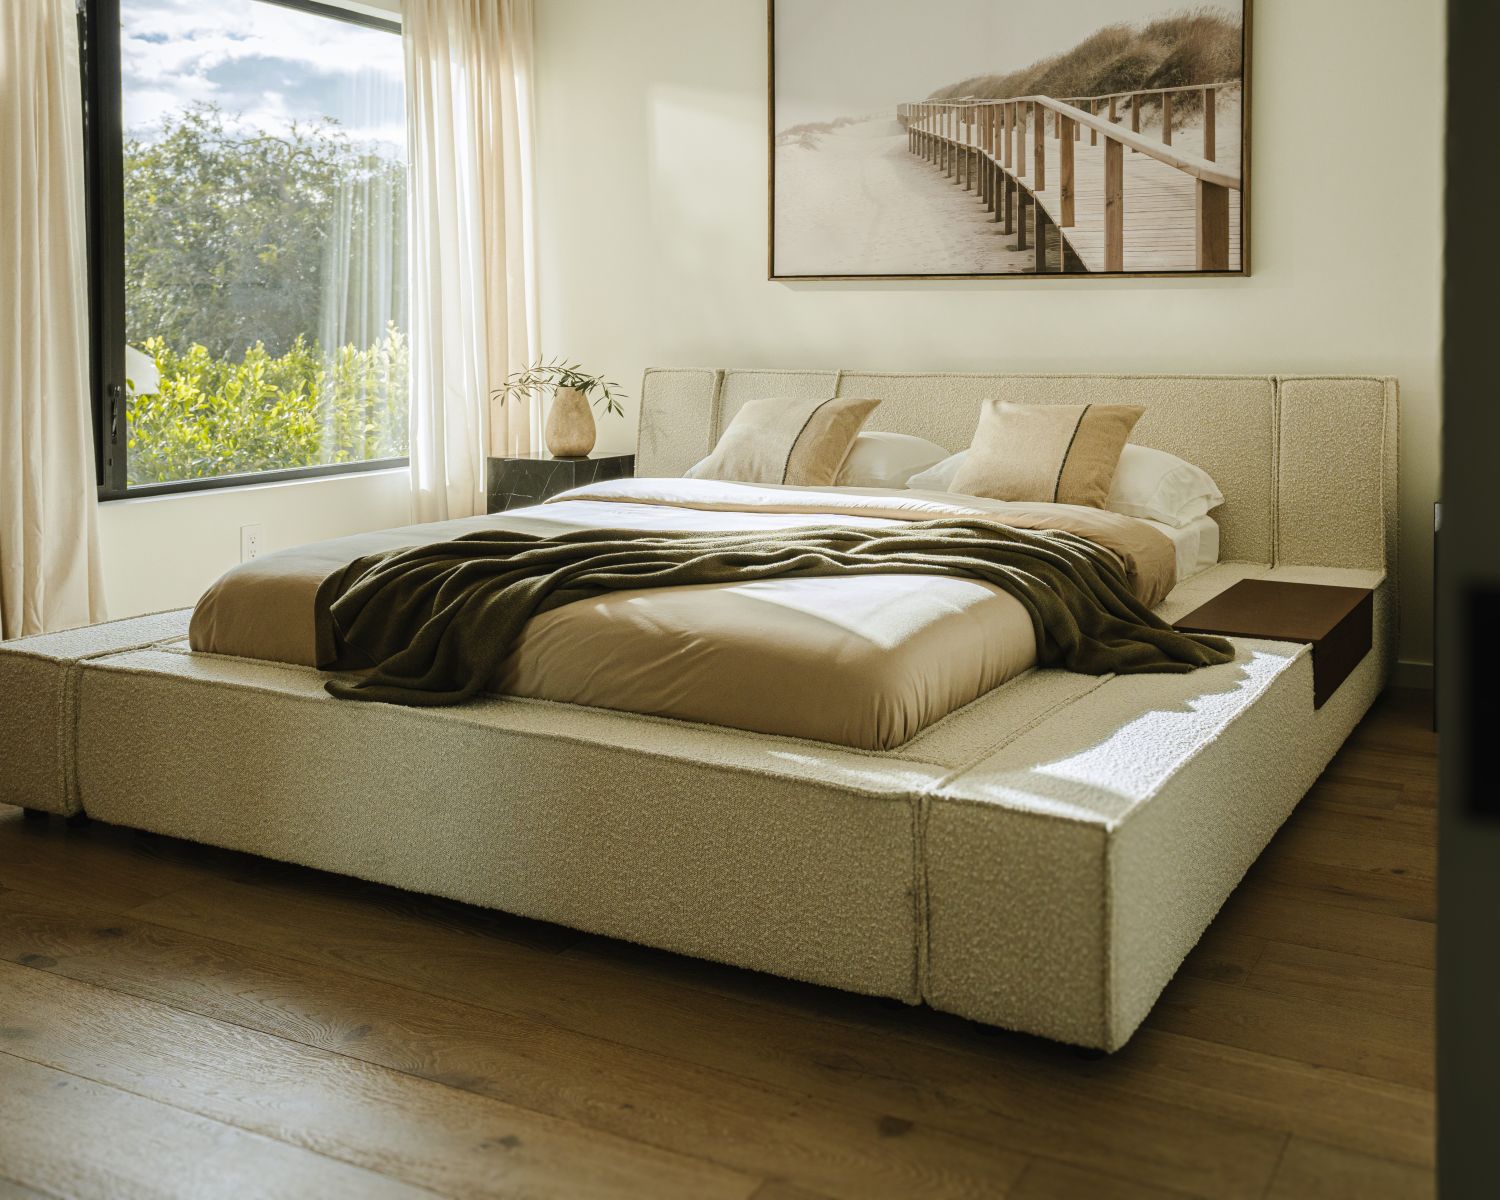 Modern Luxury Master Bedroom Designs